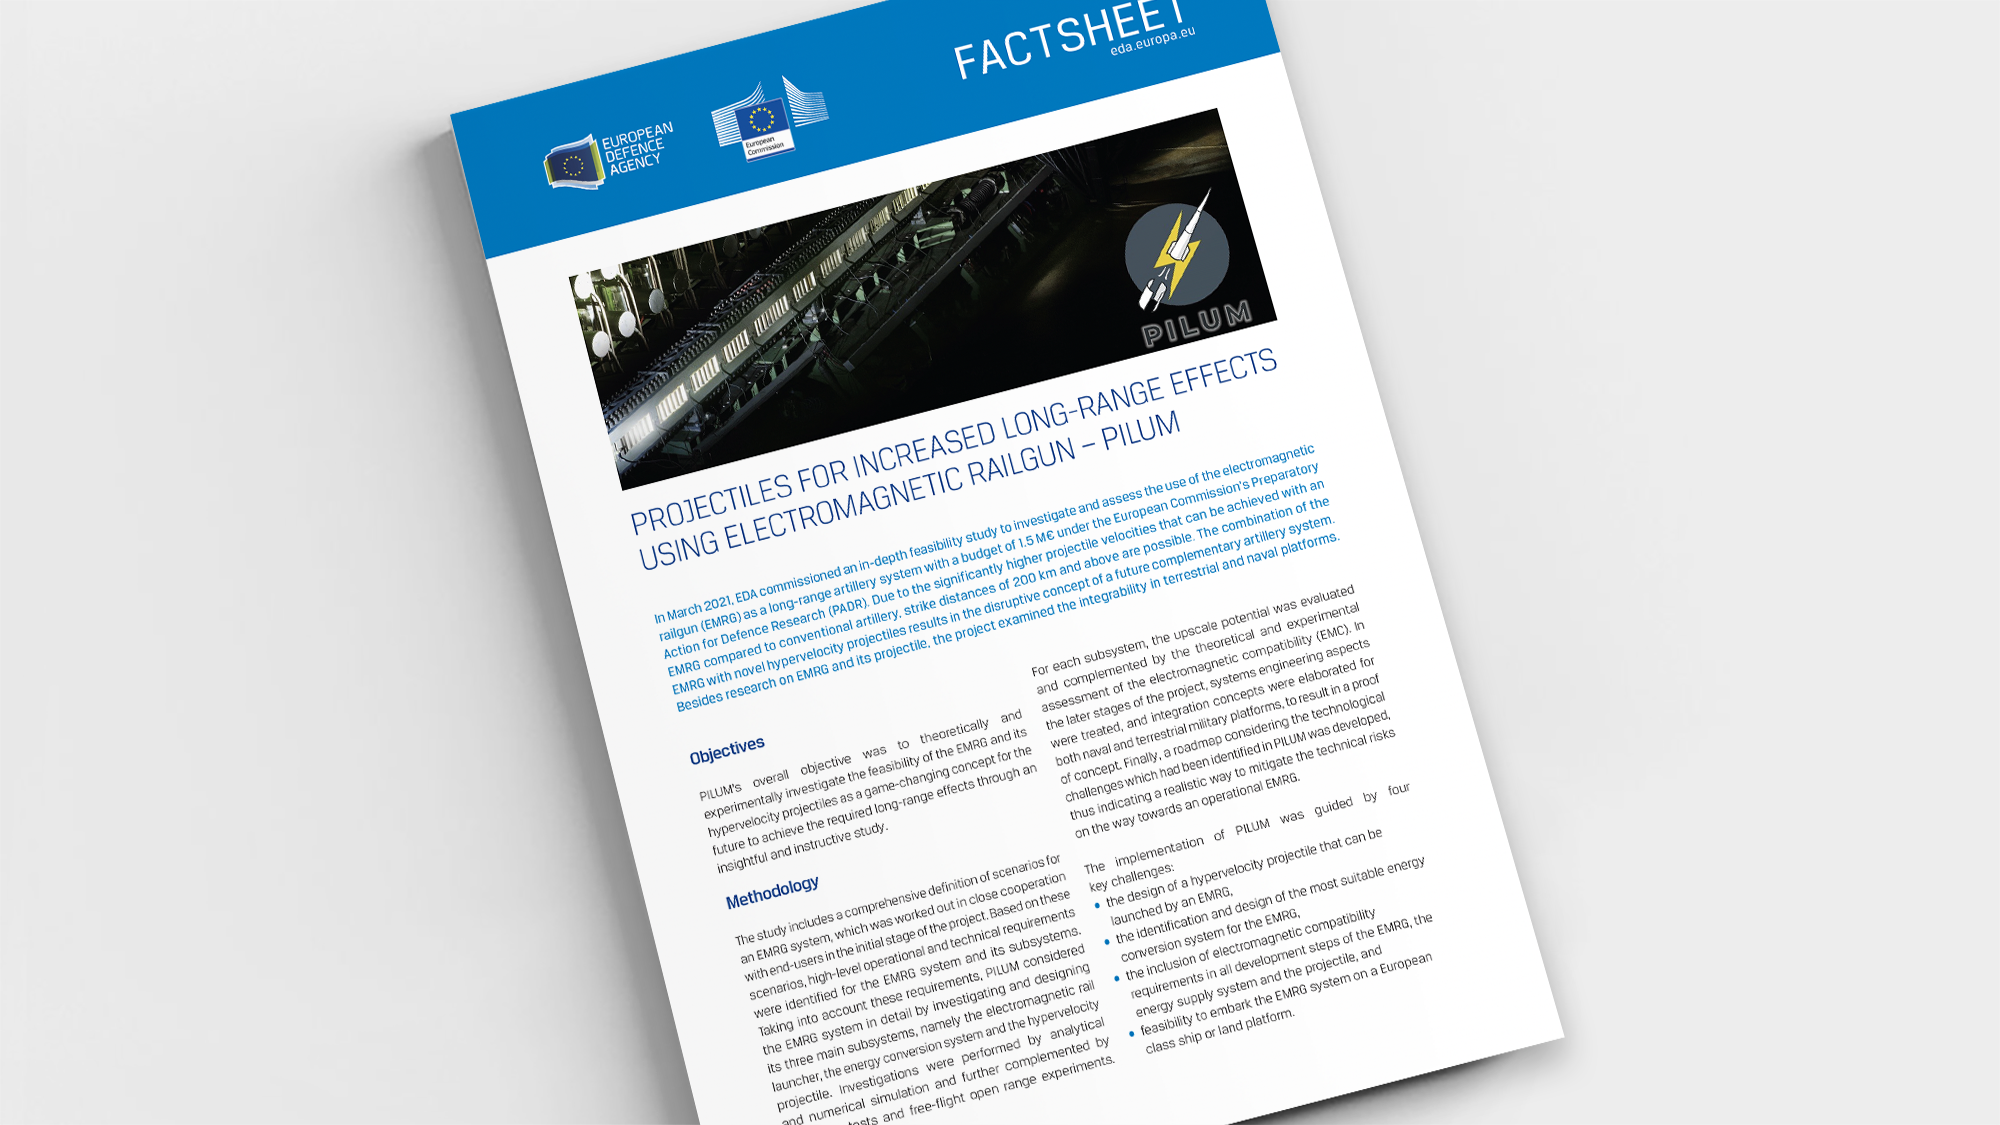 Factsheet: Projectiles for increased long-range effects using electromagnetic railgun – PILUM